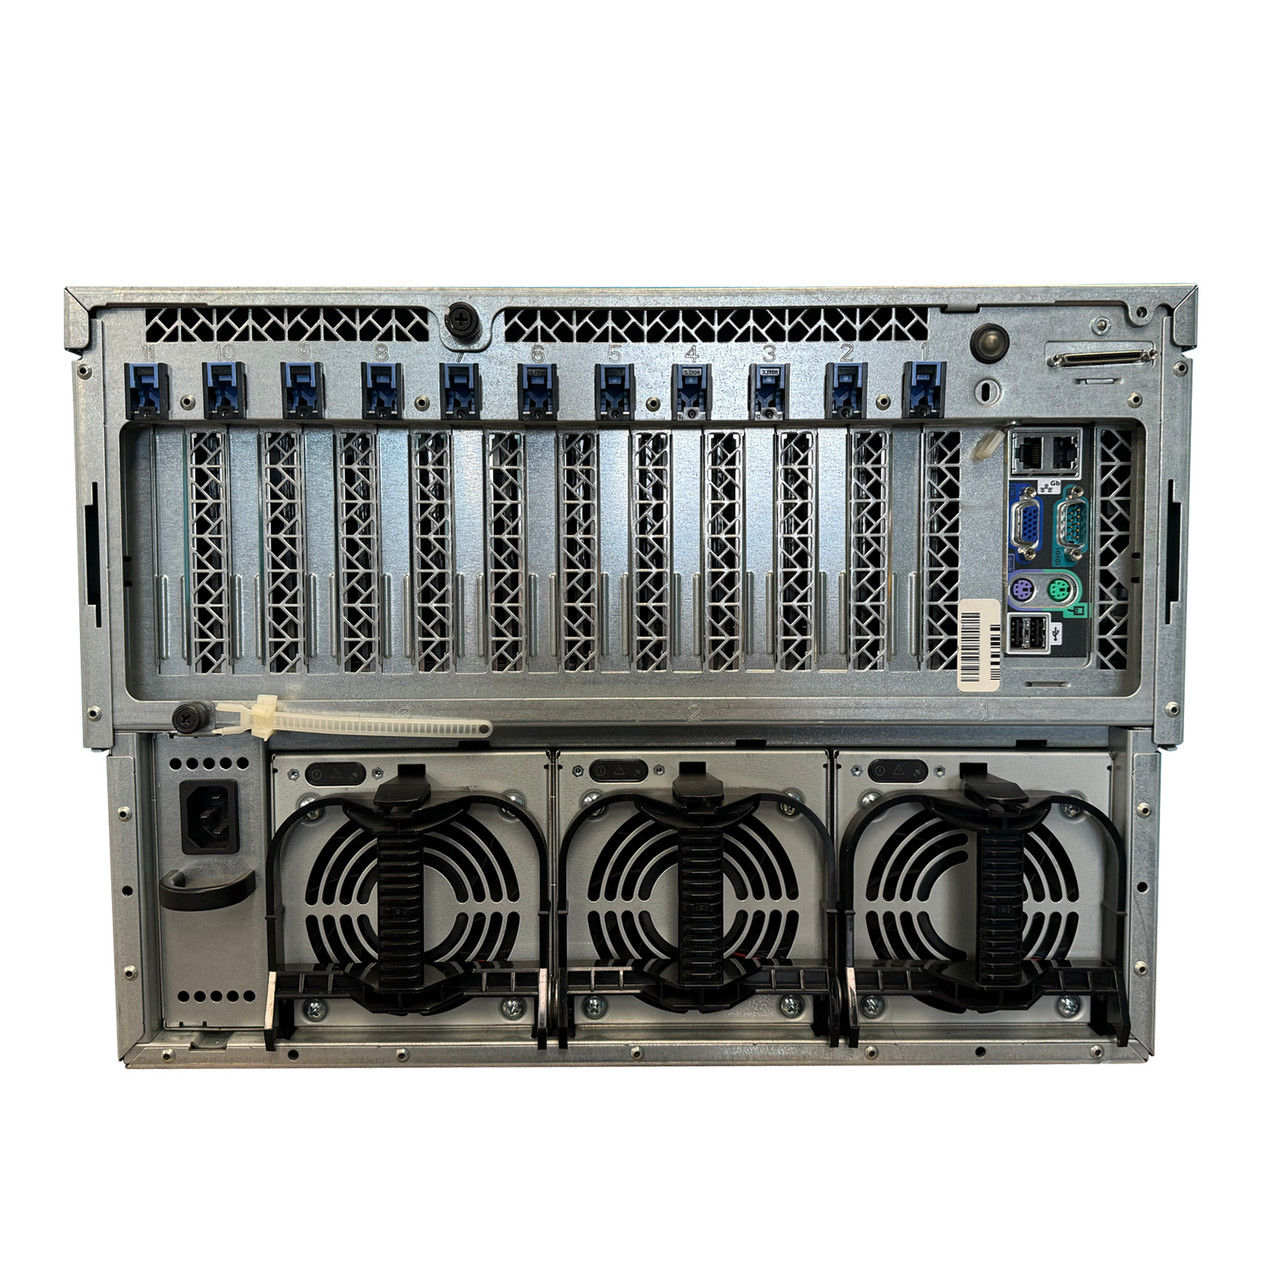 Refurbished PowerEdge 6600, 4 x 1.5Ghz, 8GB, 4 x 36GB, Perc 3DC, Rails